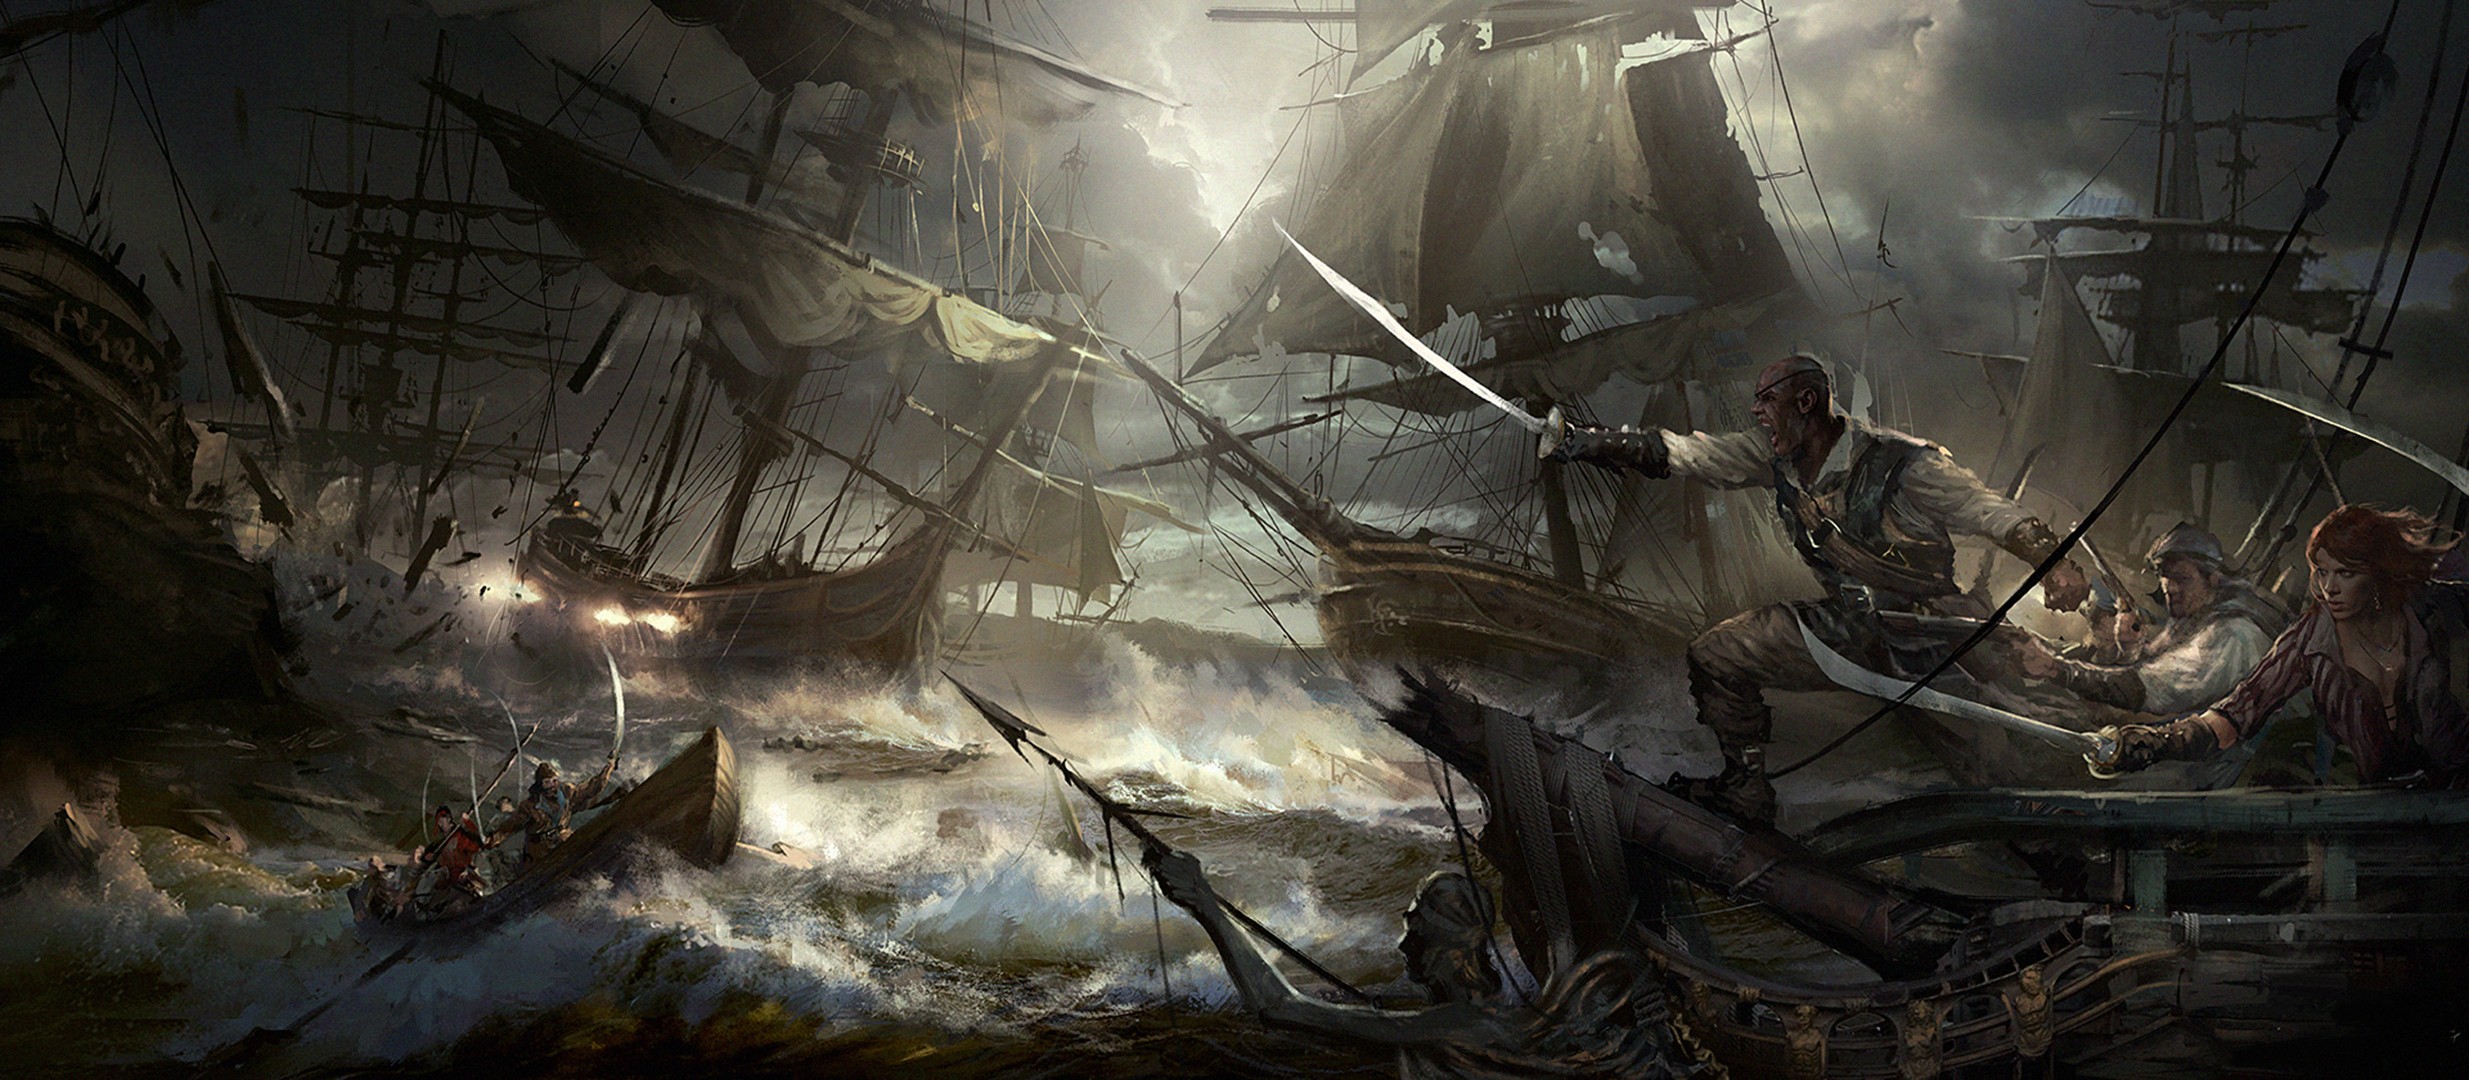 General 2469x1080 artwork fantasy art ocean battle ship sailing ship vehicle rigging (ship) digital art ultrawide